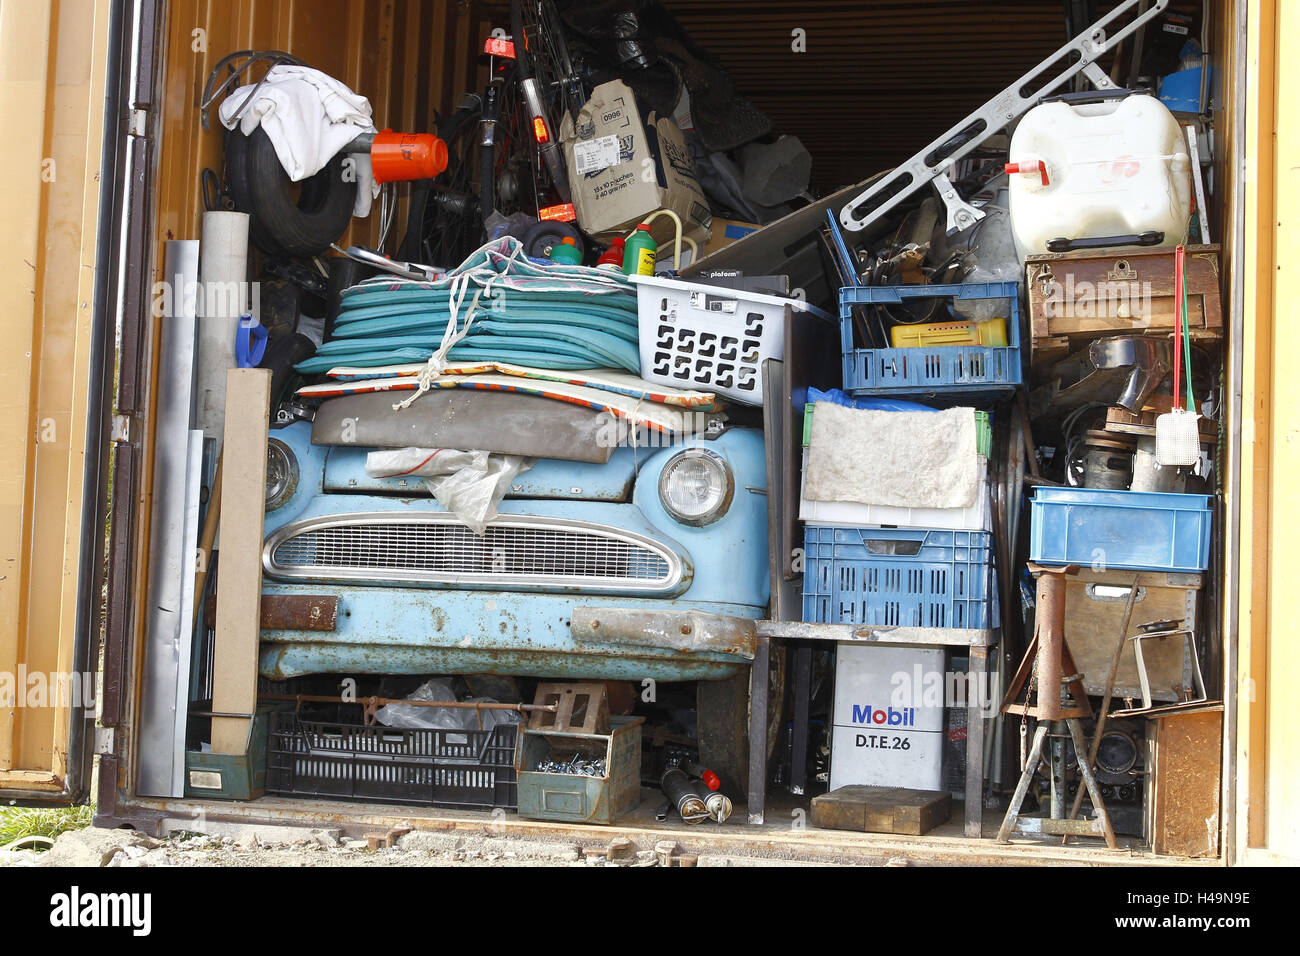 Garage, Lloyd Oldtimer, barn finding under scrap metal Stock Photo - Alamy